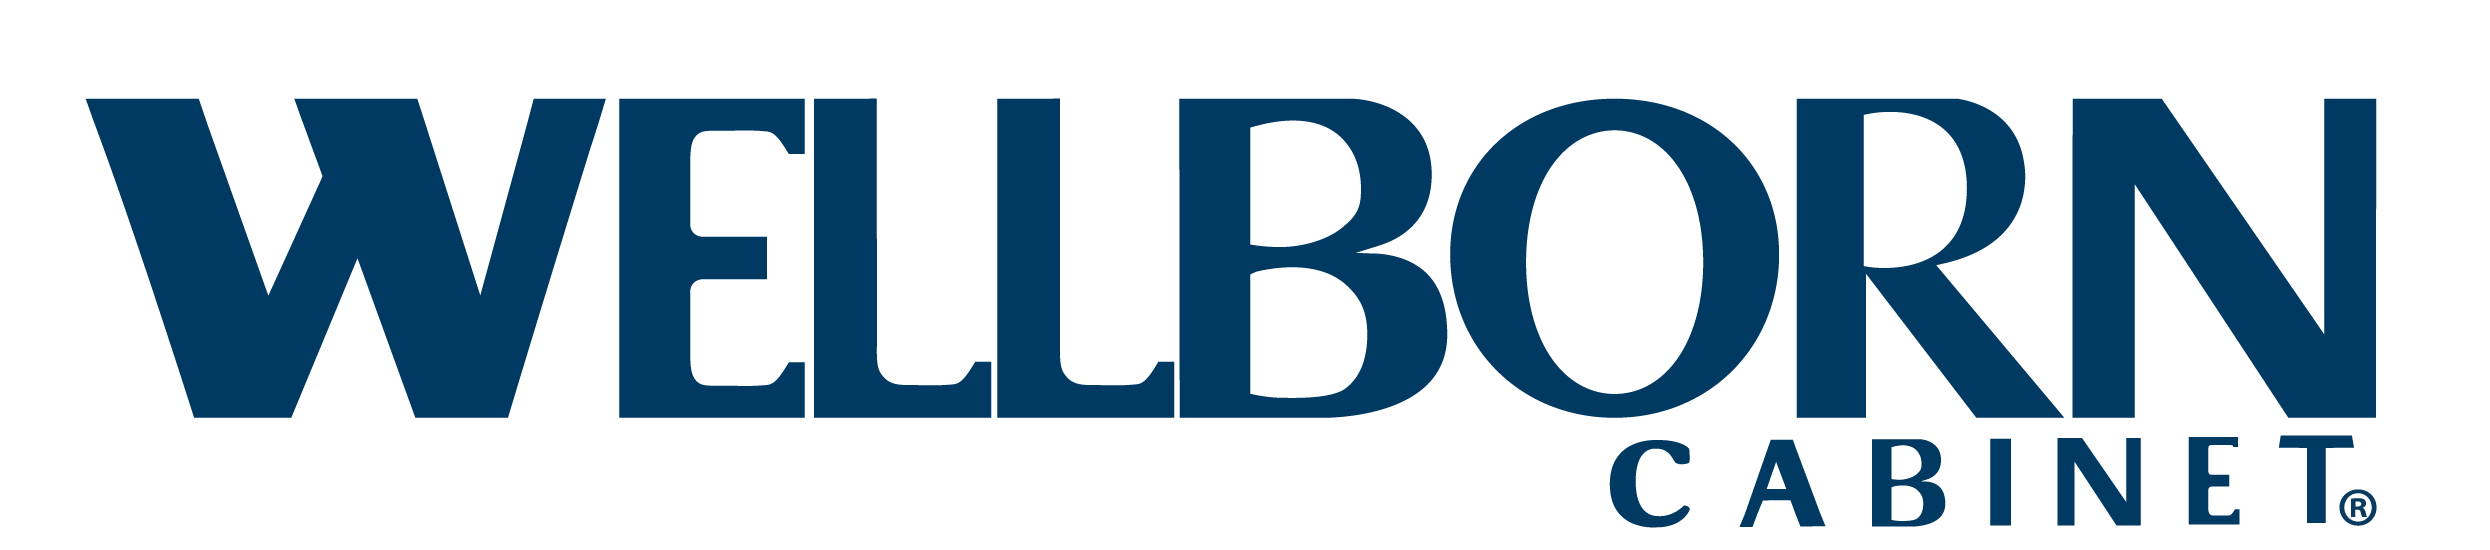 Wellborn-logo.png